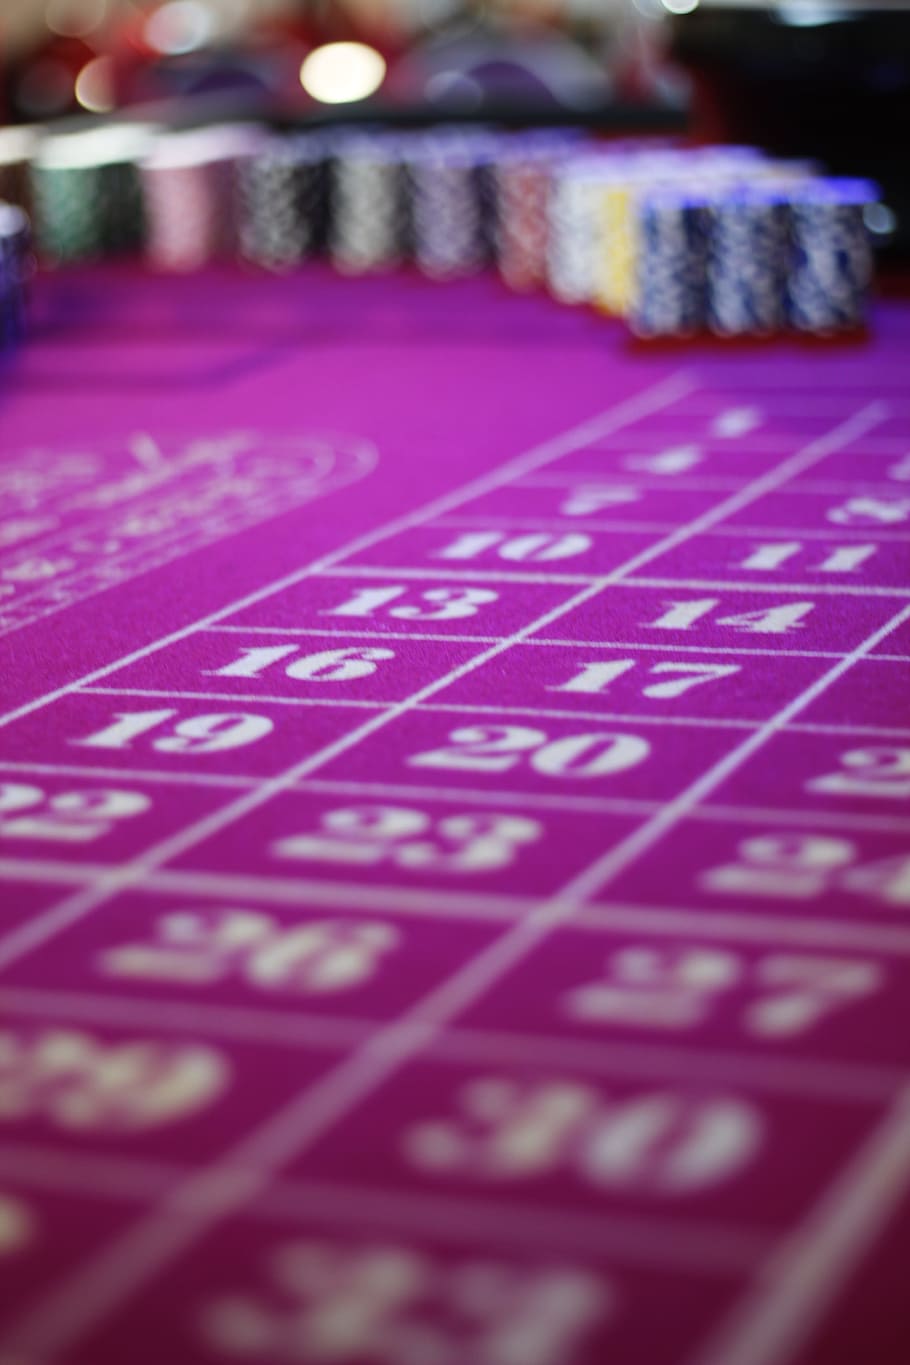 poker table, Casino, Play, Las Vegas, Gambling, Chips, gambling, chips, luck, ace, profit